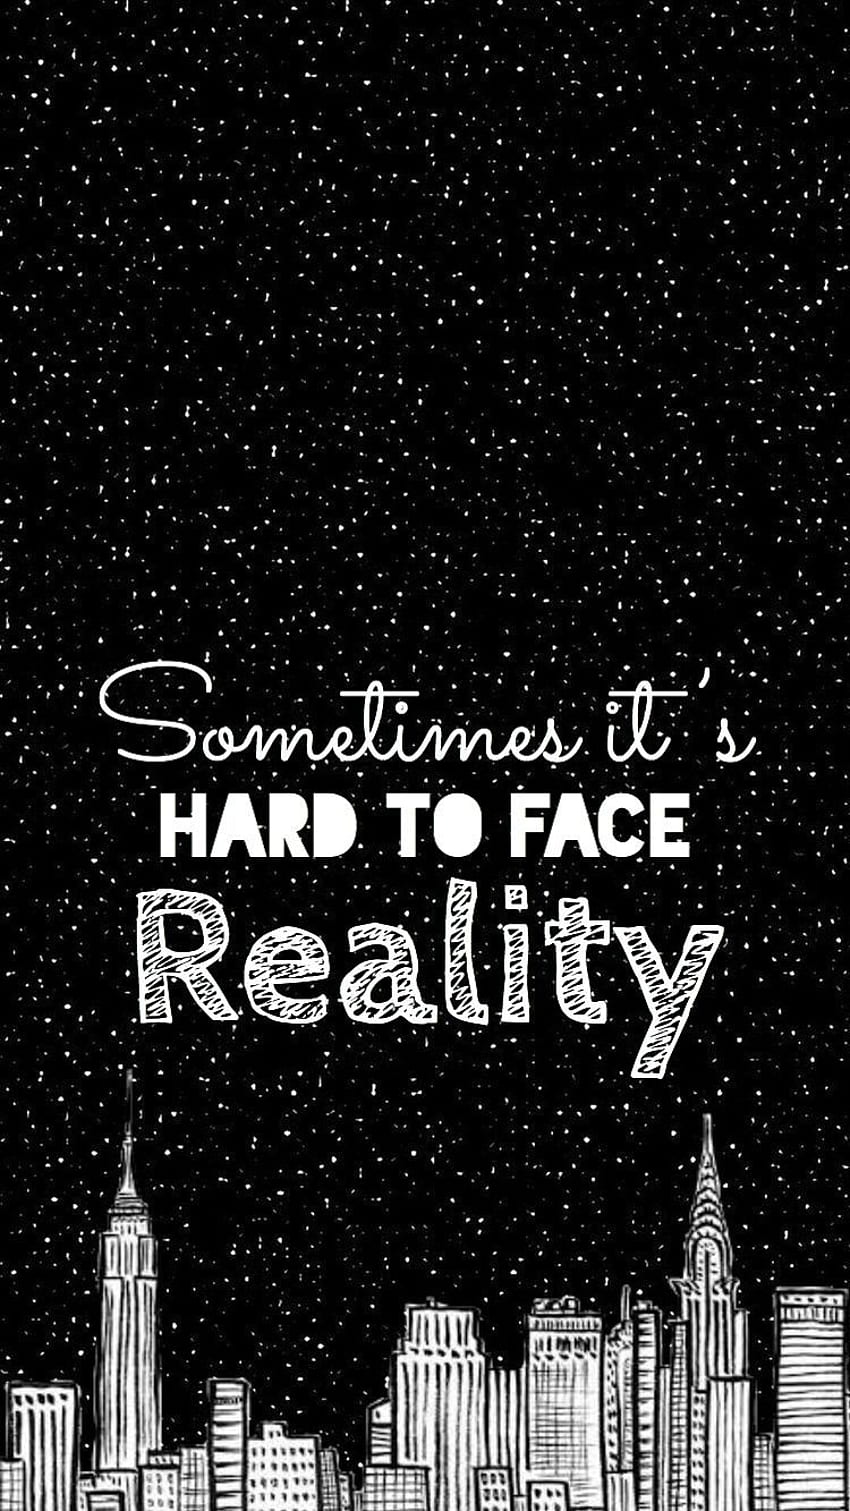 Hard to face reality - Poo bear & Justin Bieber Lock screen Lyrics, Sad Face Aesthetic HD phone wallpaper